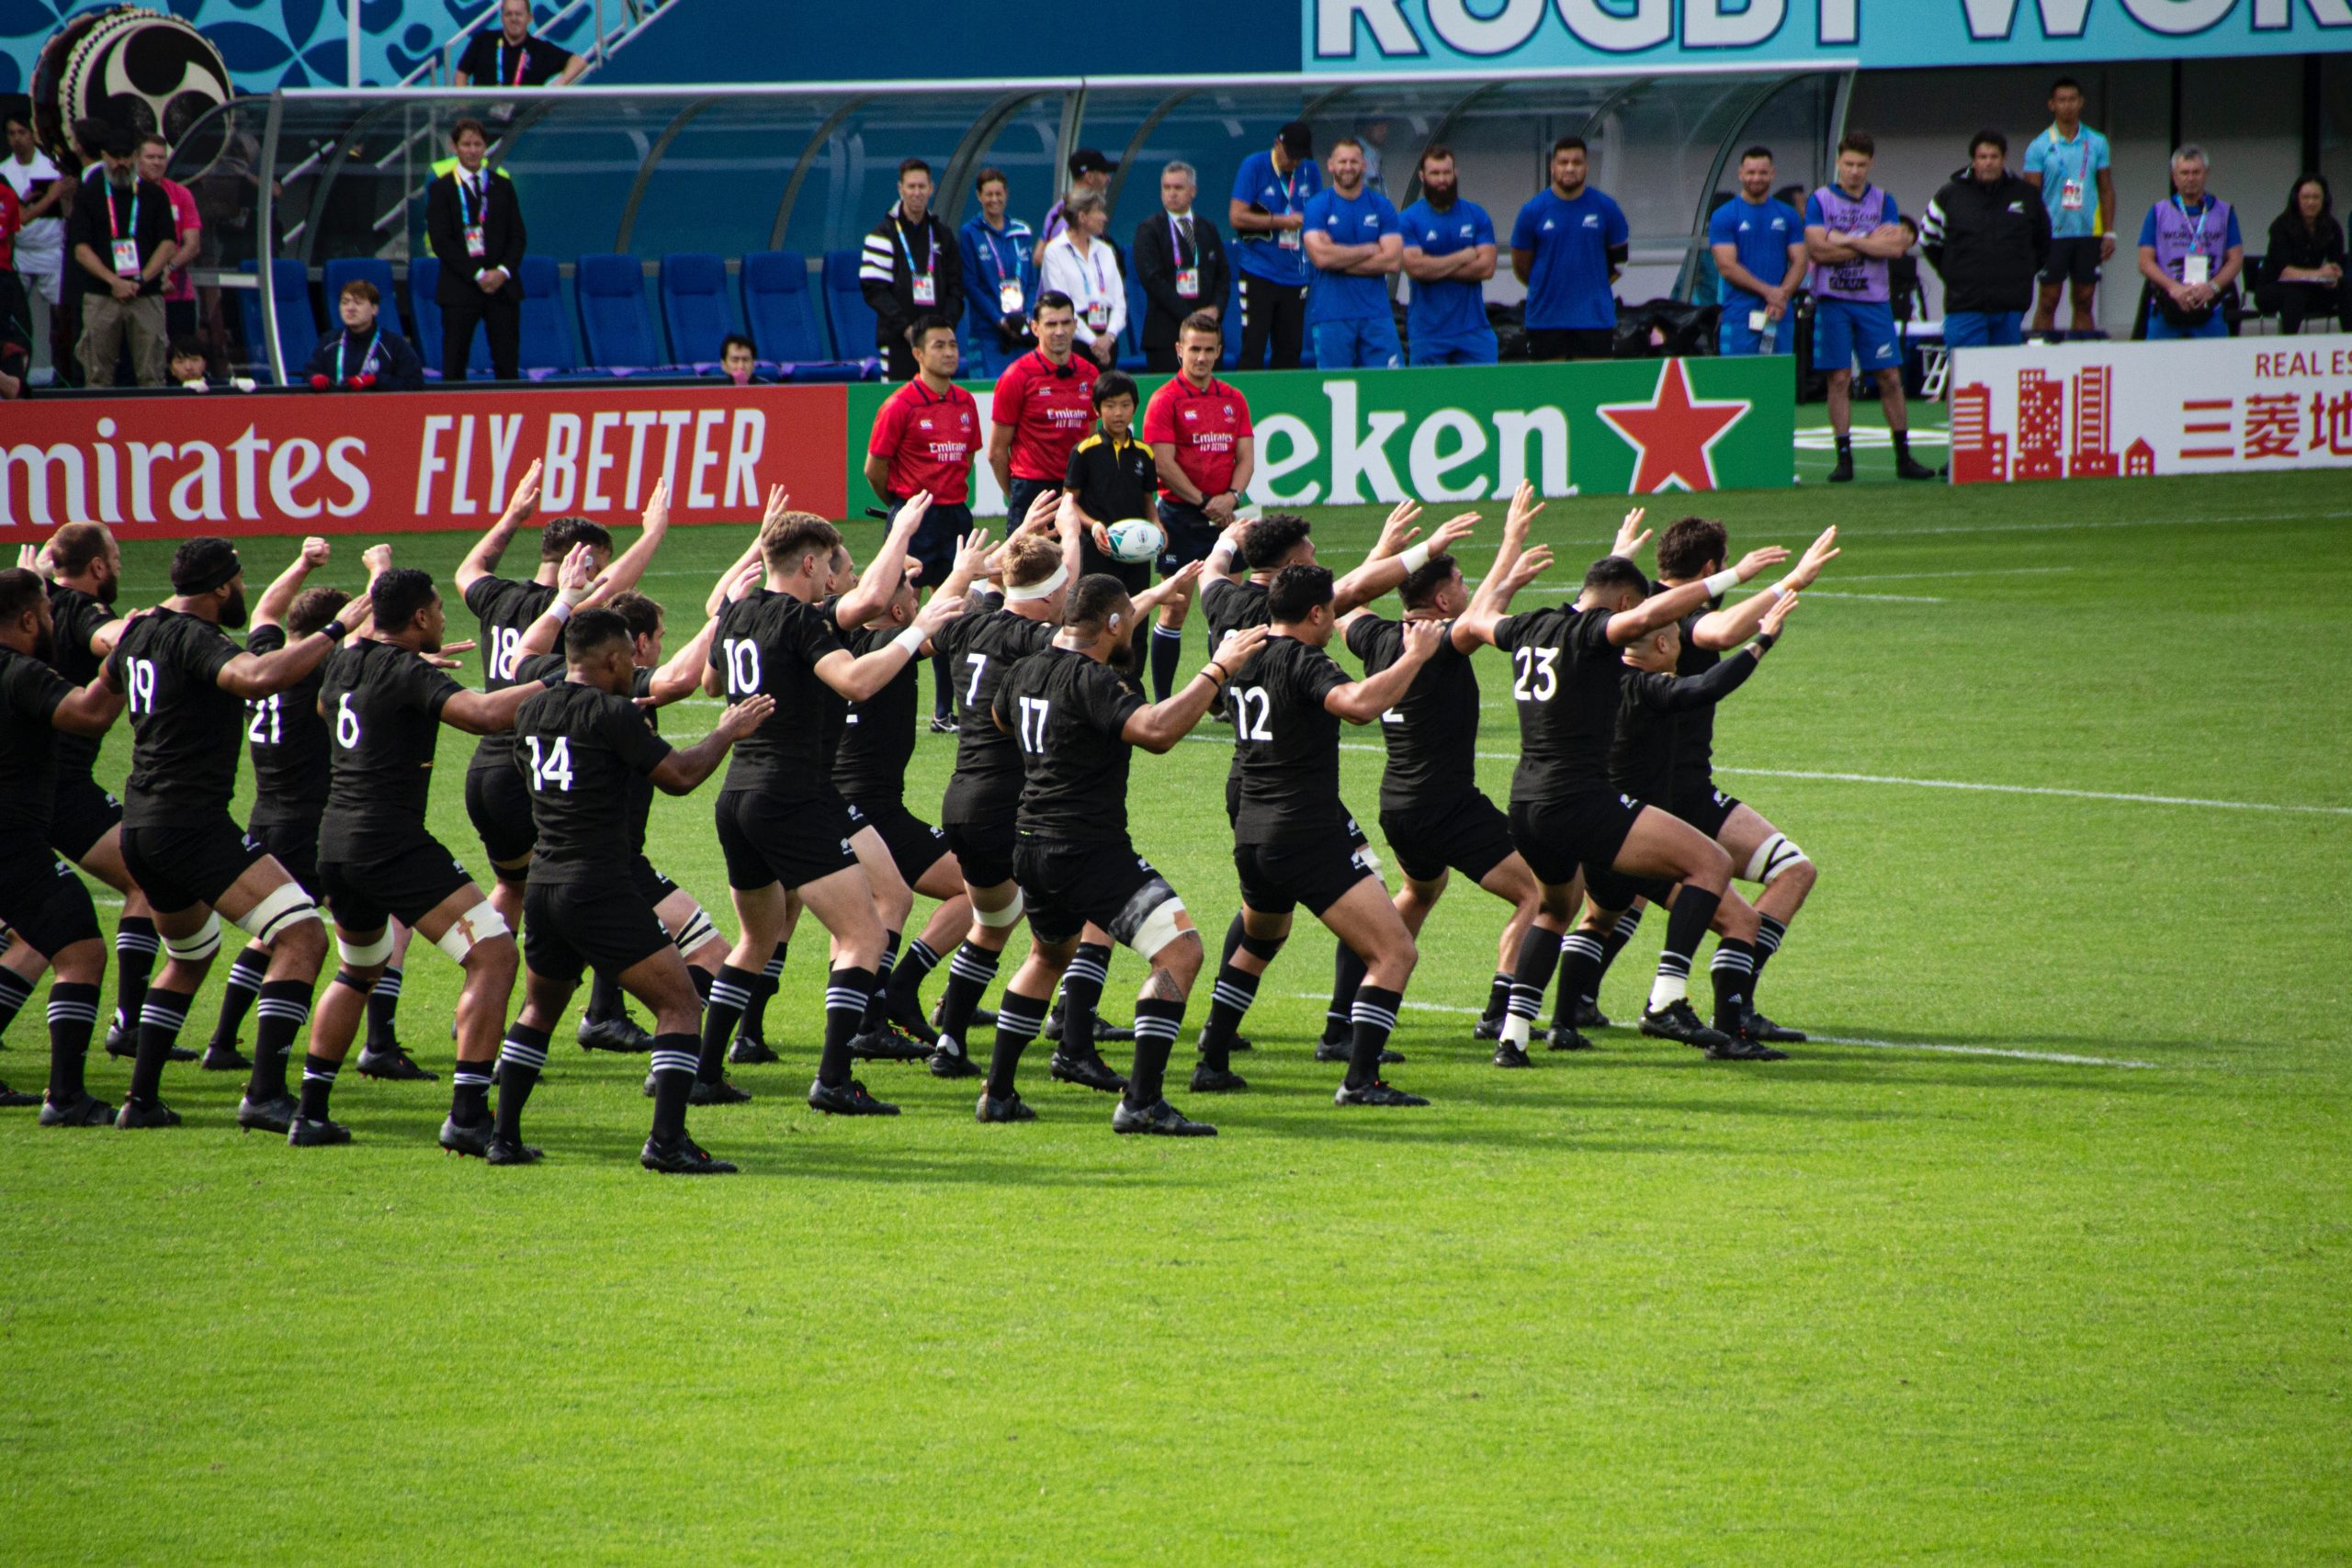 NZ rugby team is showing Haka dance